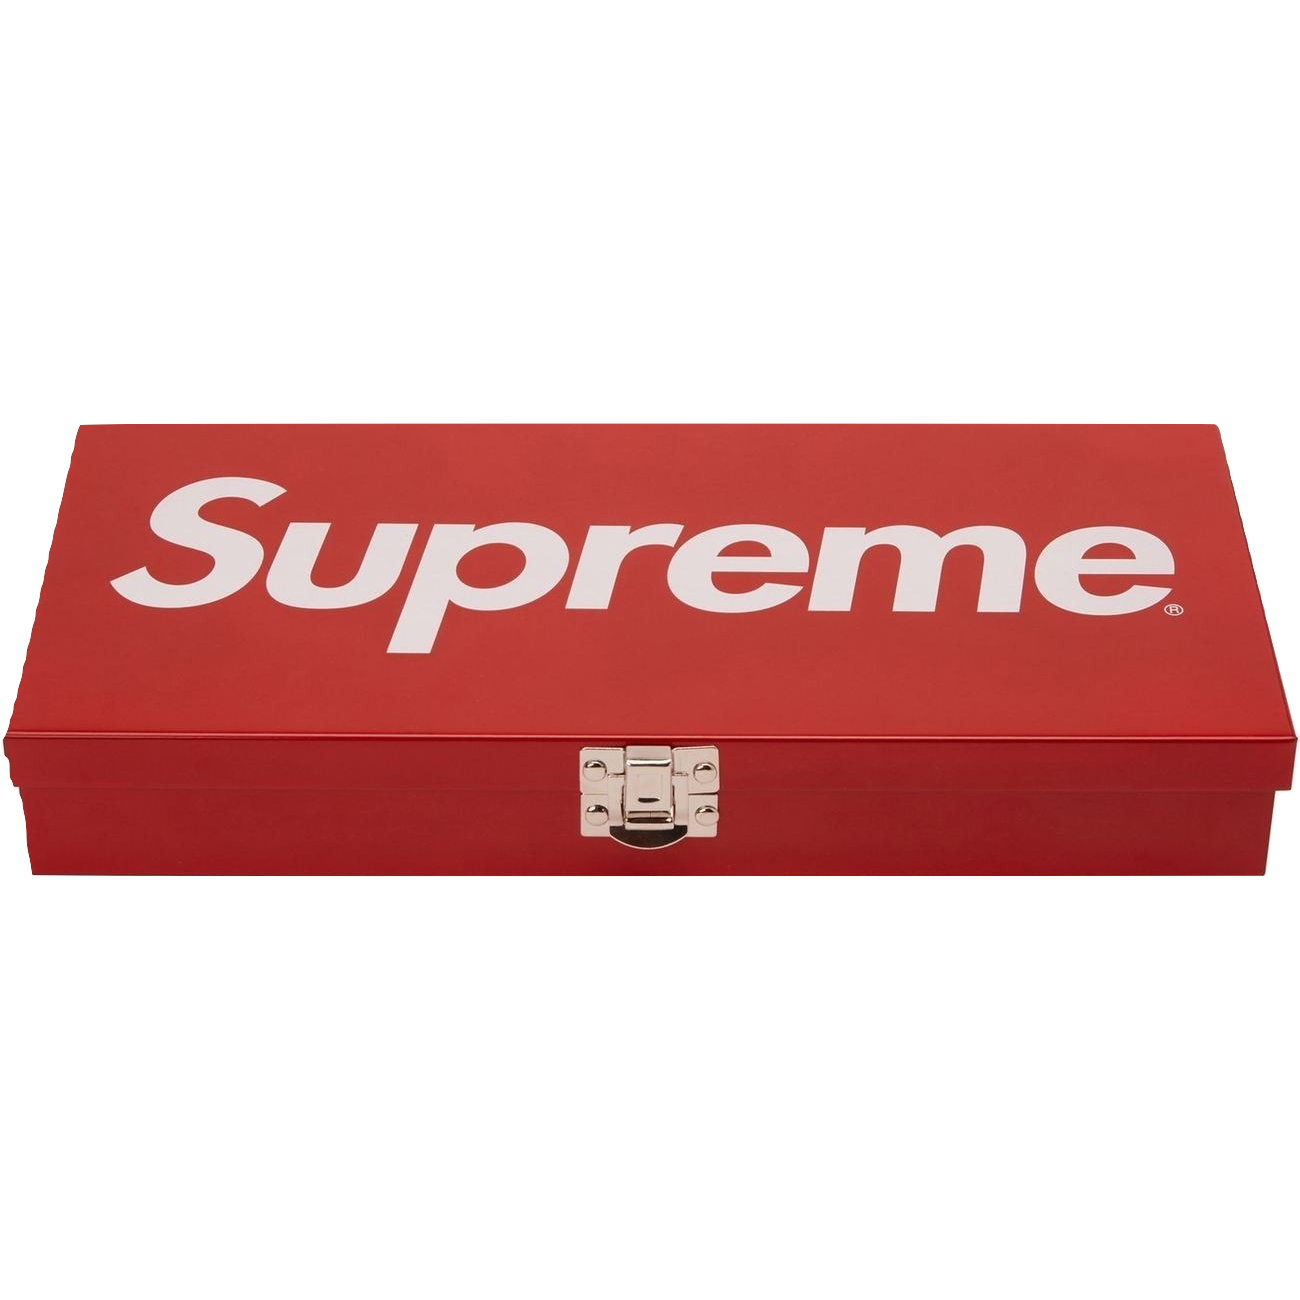 Supreme Large Metal Storage Box SS17 - Red - Used